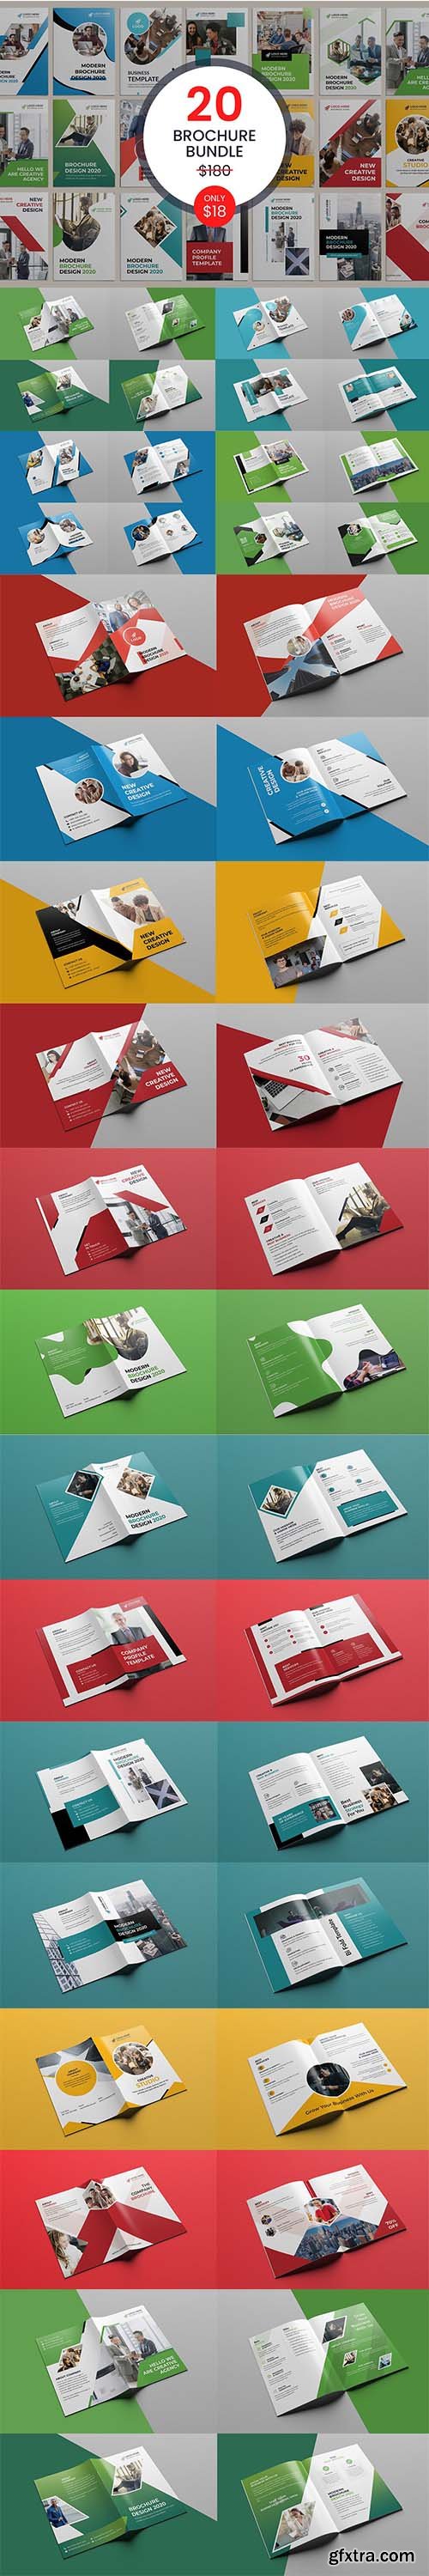 CreativeMarket - 20 Bi-fold Brochure Template Bundle 5487372